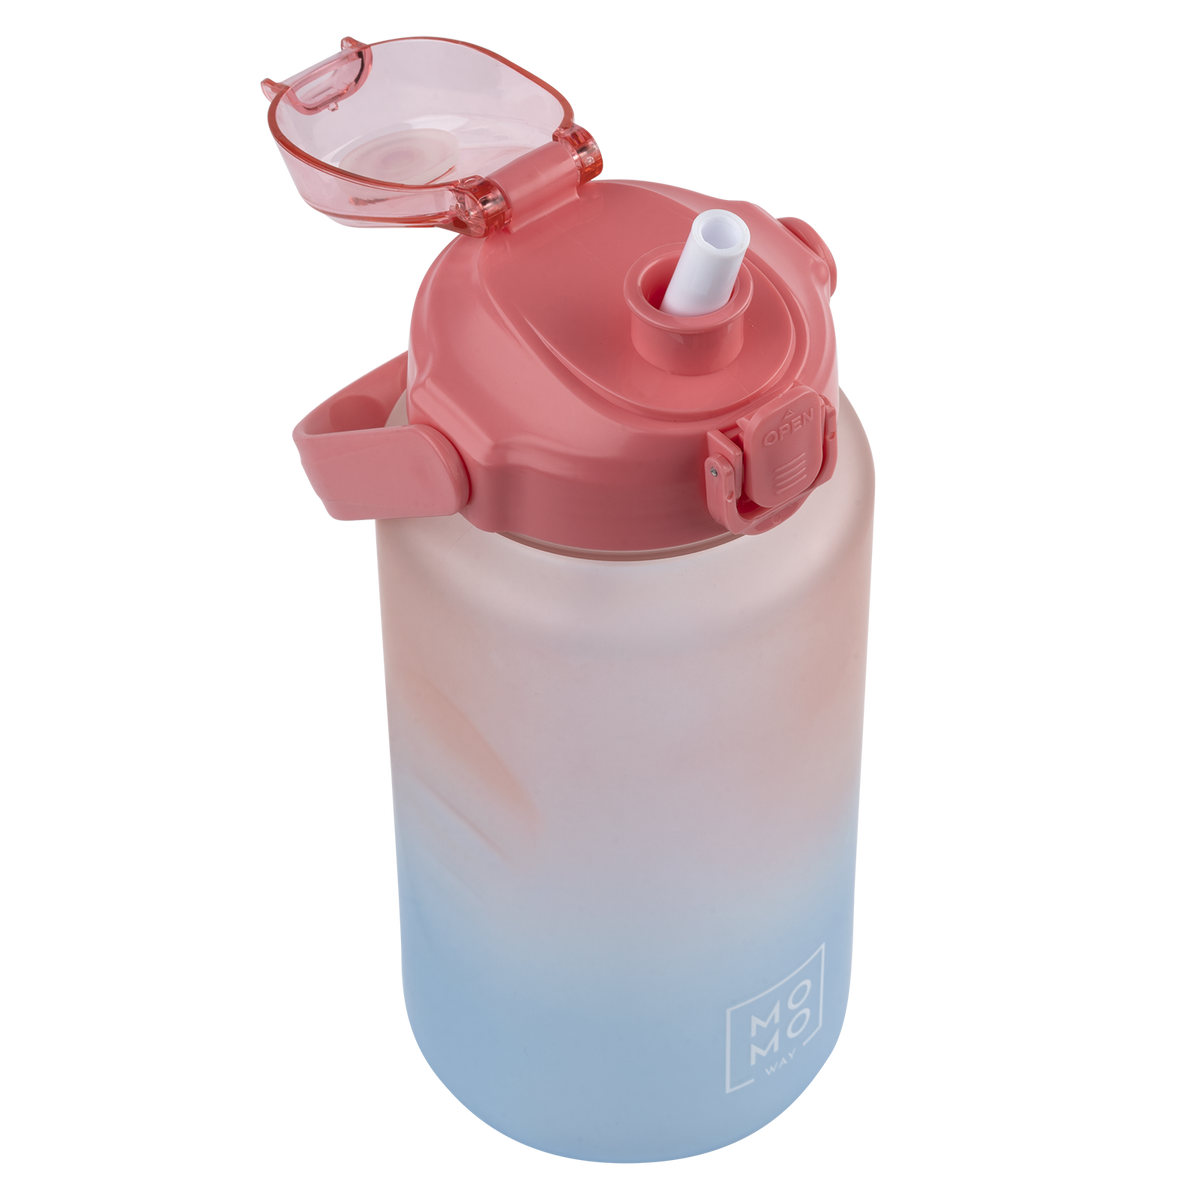 Borraccia 1,5L rosa e blu, BPA free - 14,99 €